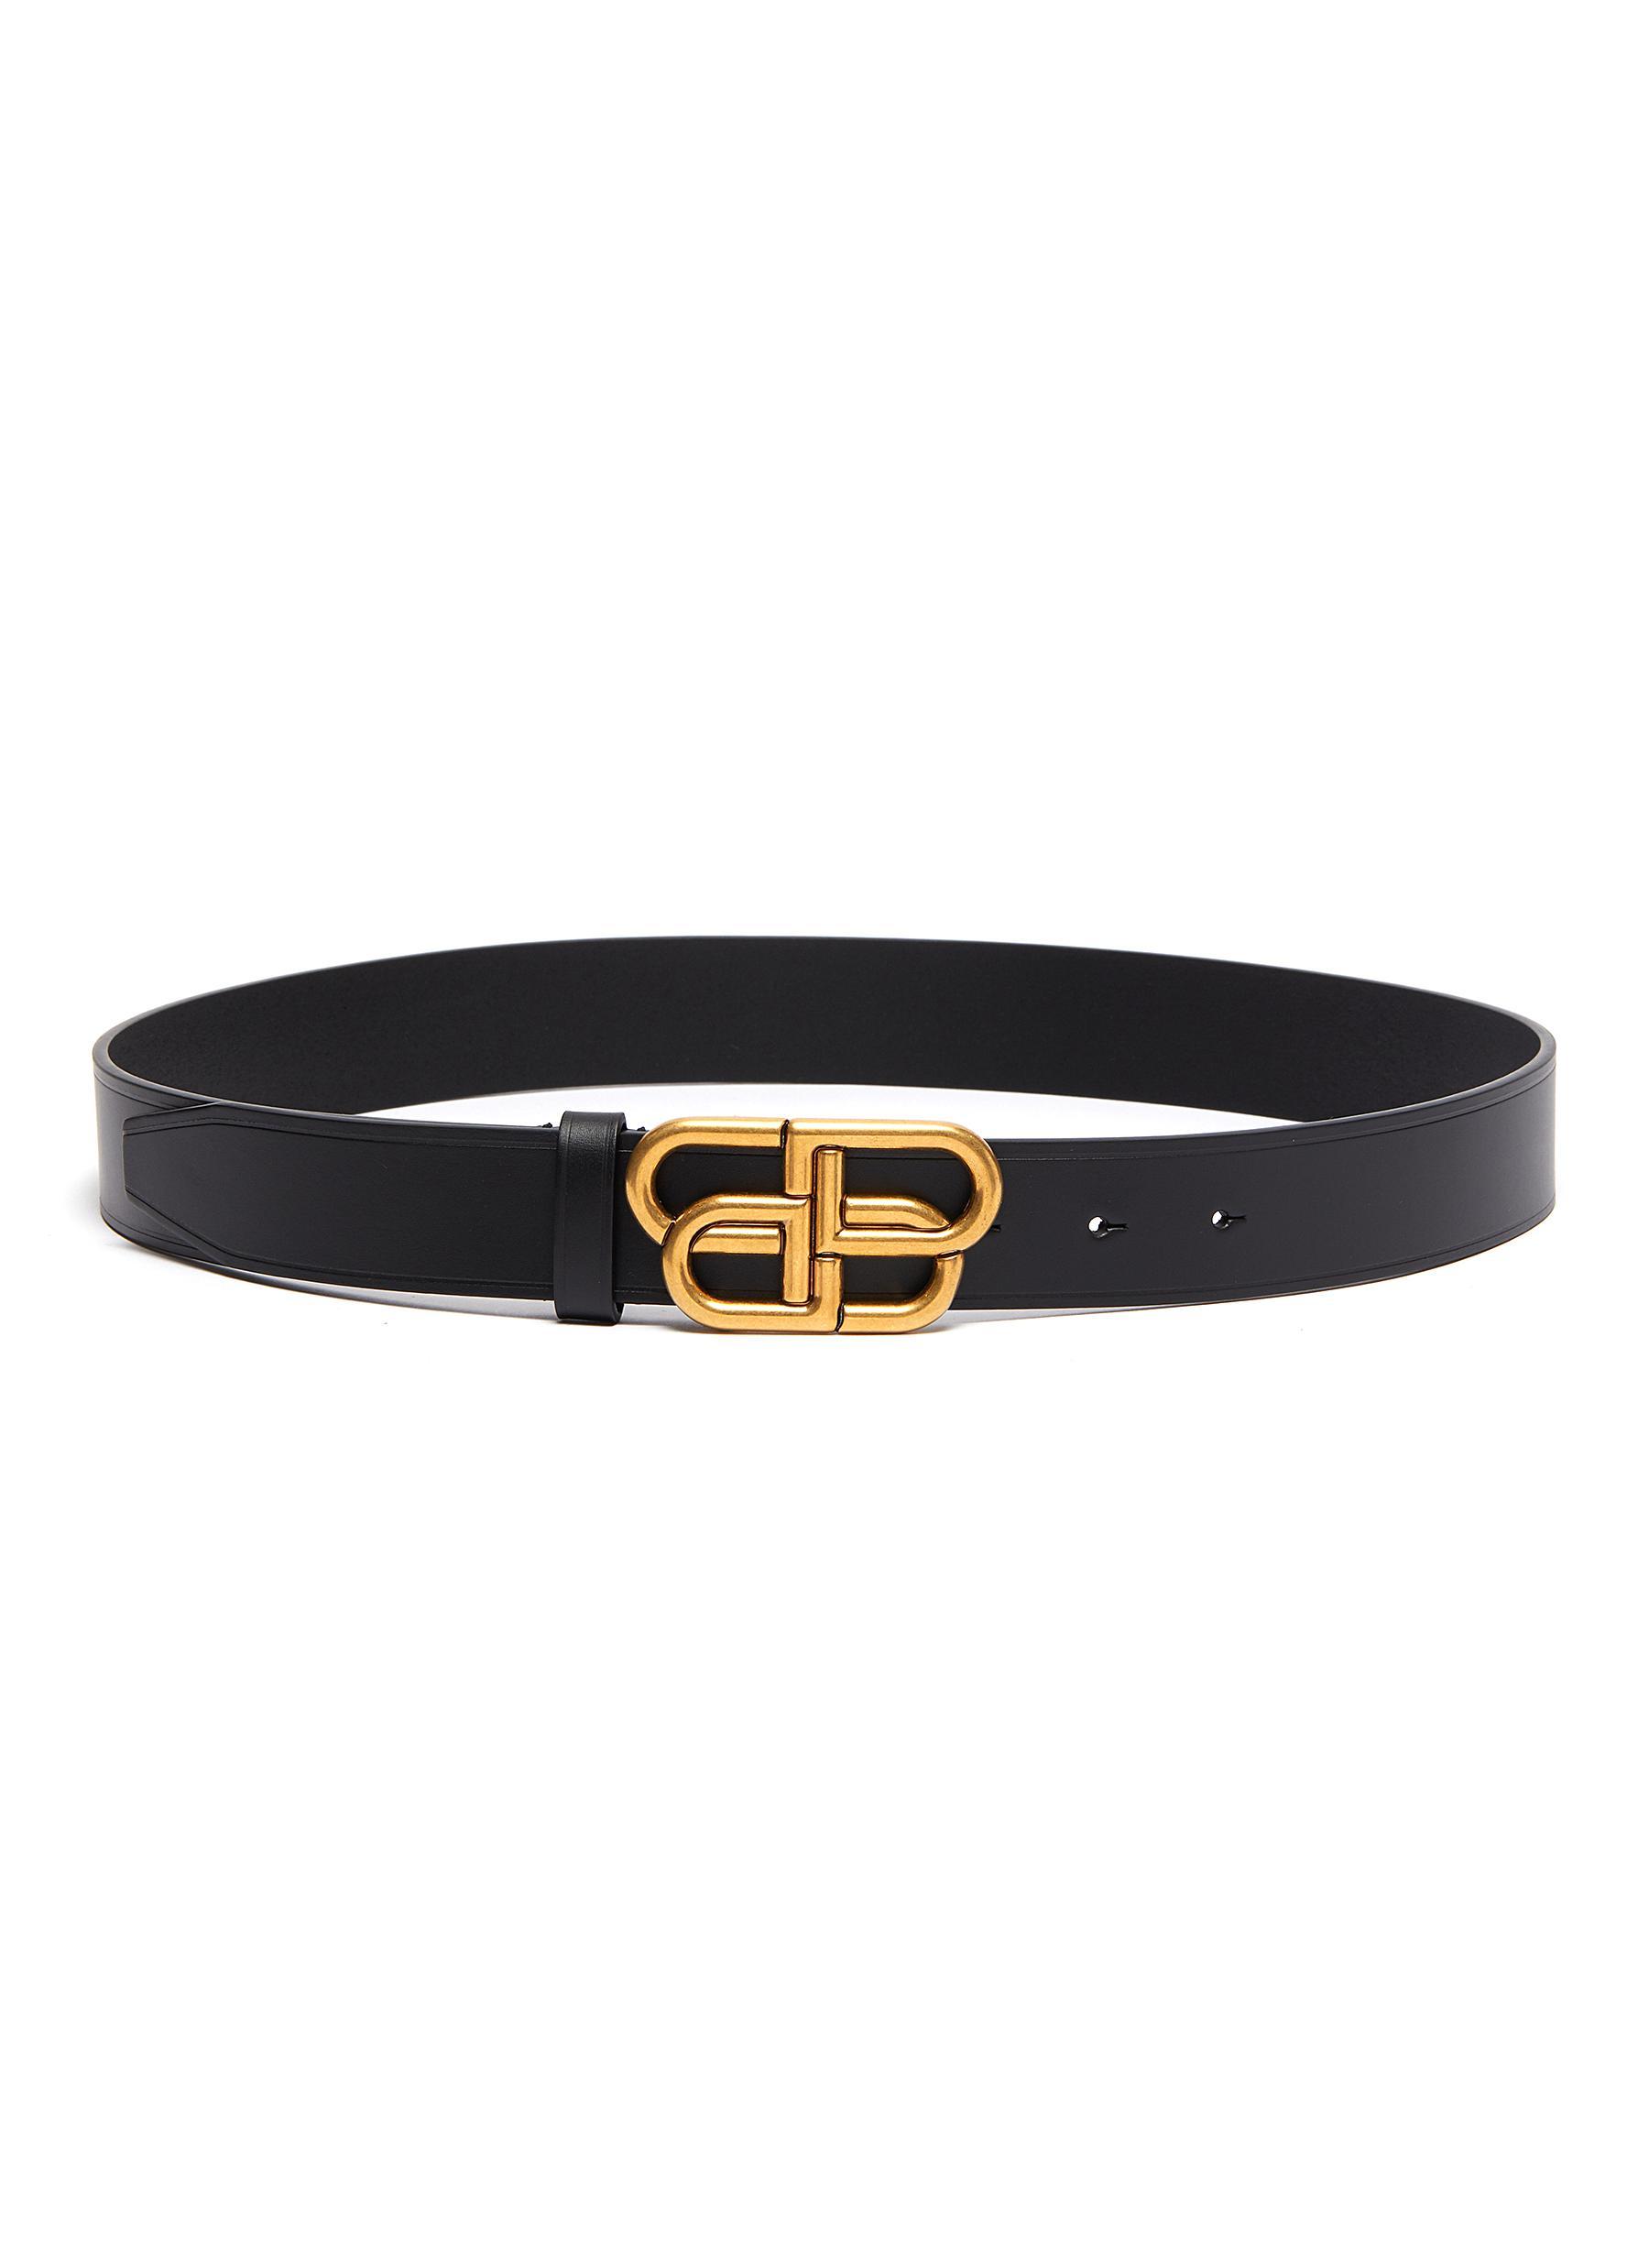 Balenciaga Bb Logo Buckle Leather Belt in Gold (Metallic) for Men - Lyst